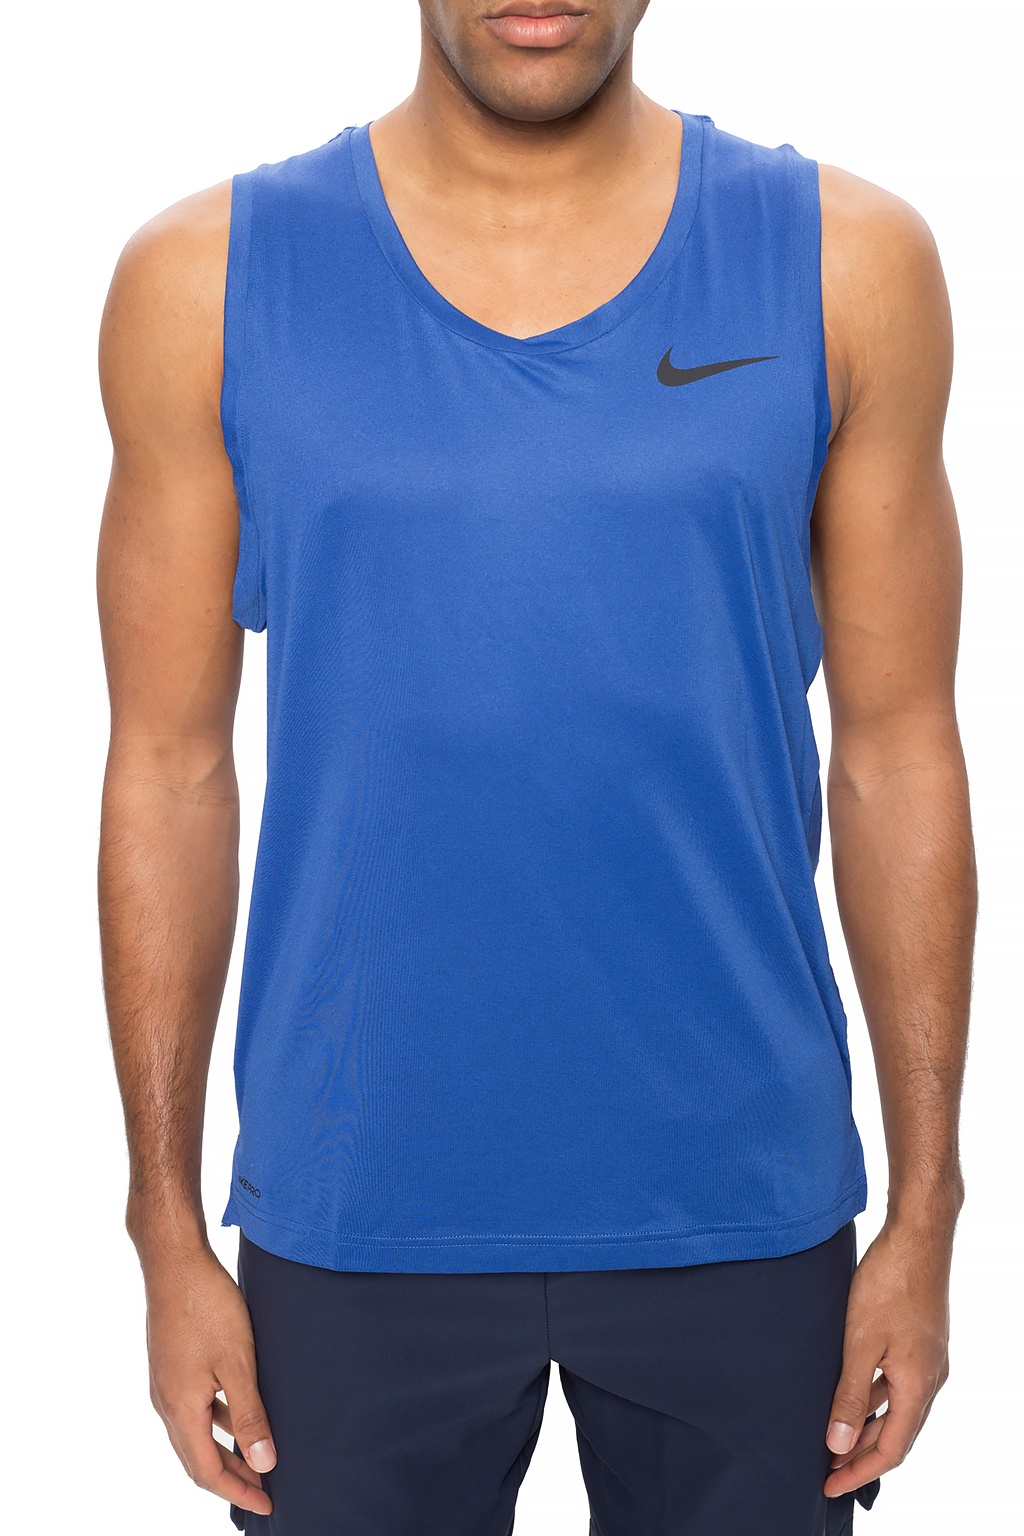 Blue Sleeveless T-shirt with logo Nike - Vitkac GB